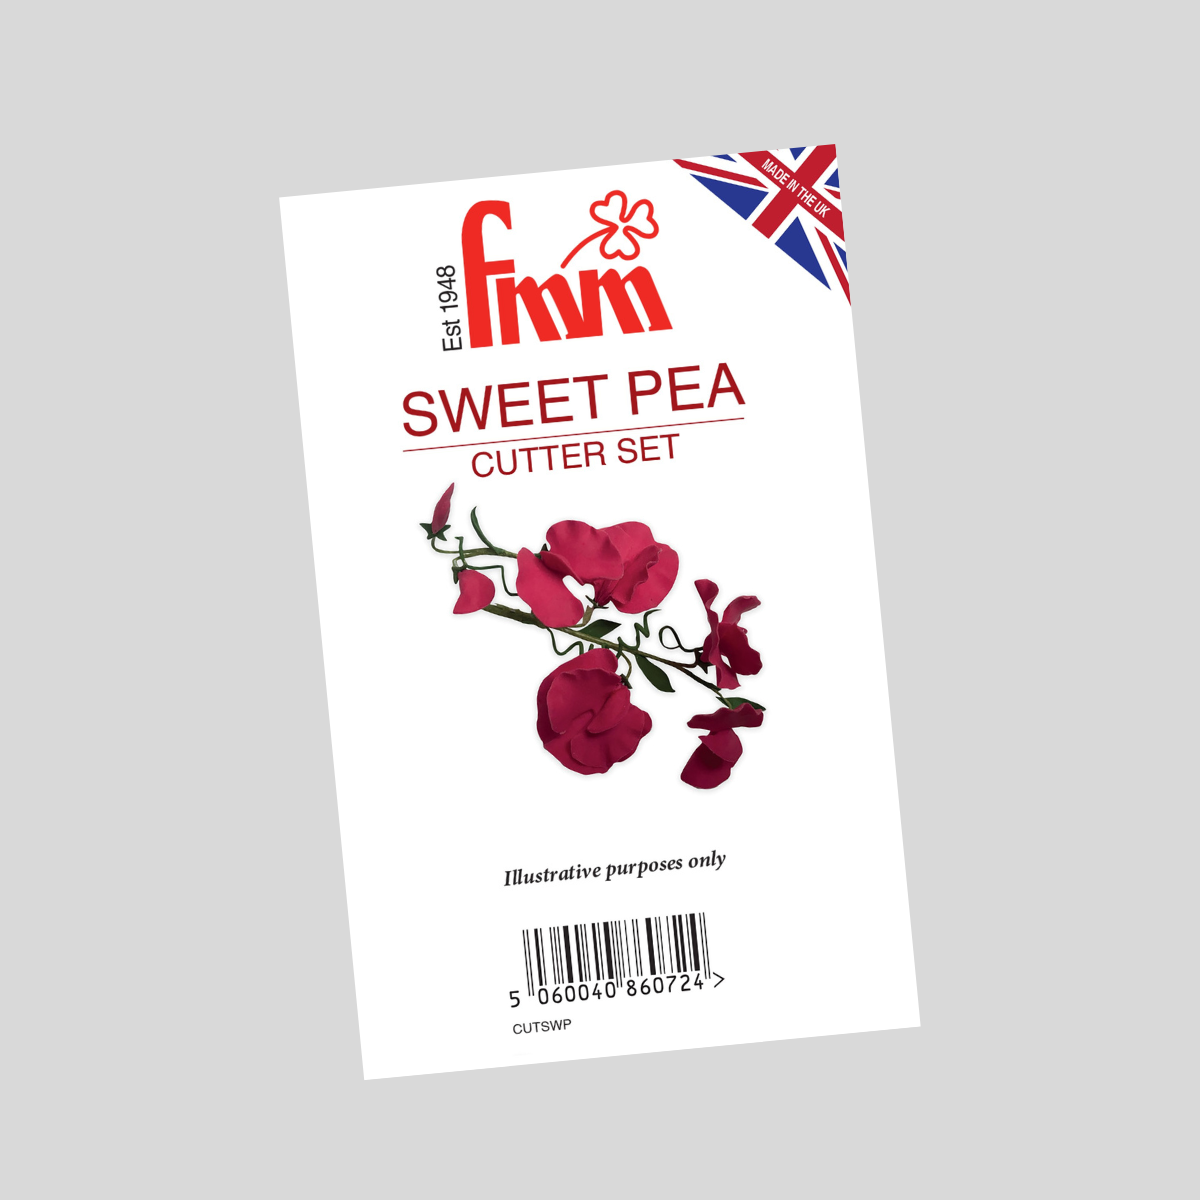 Sweet Pea Cutter Set - FMM Sugarcraft